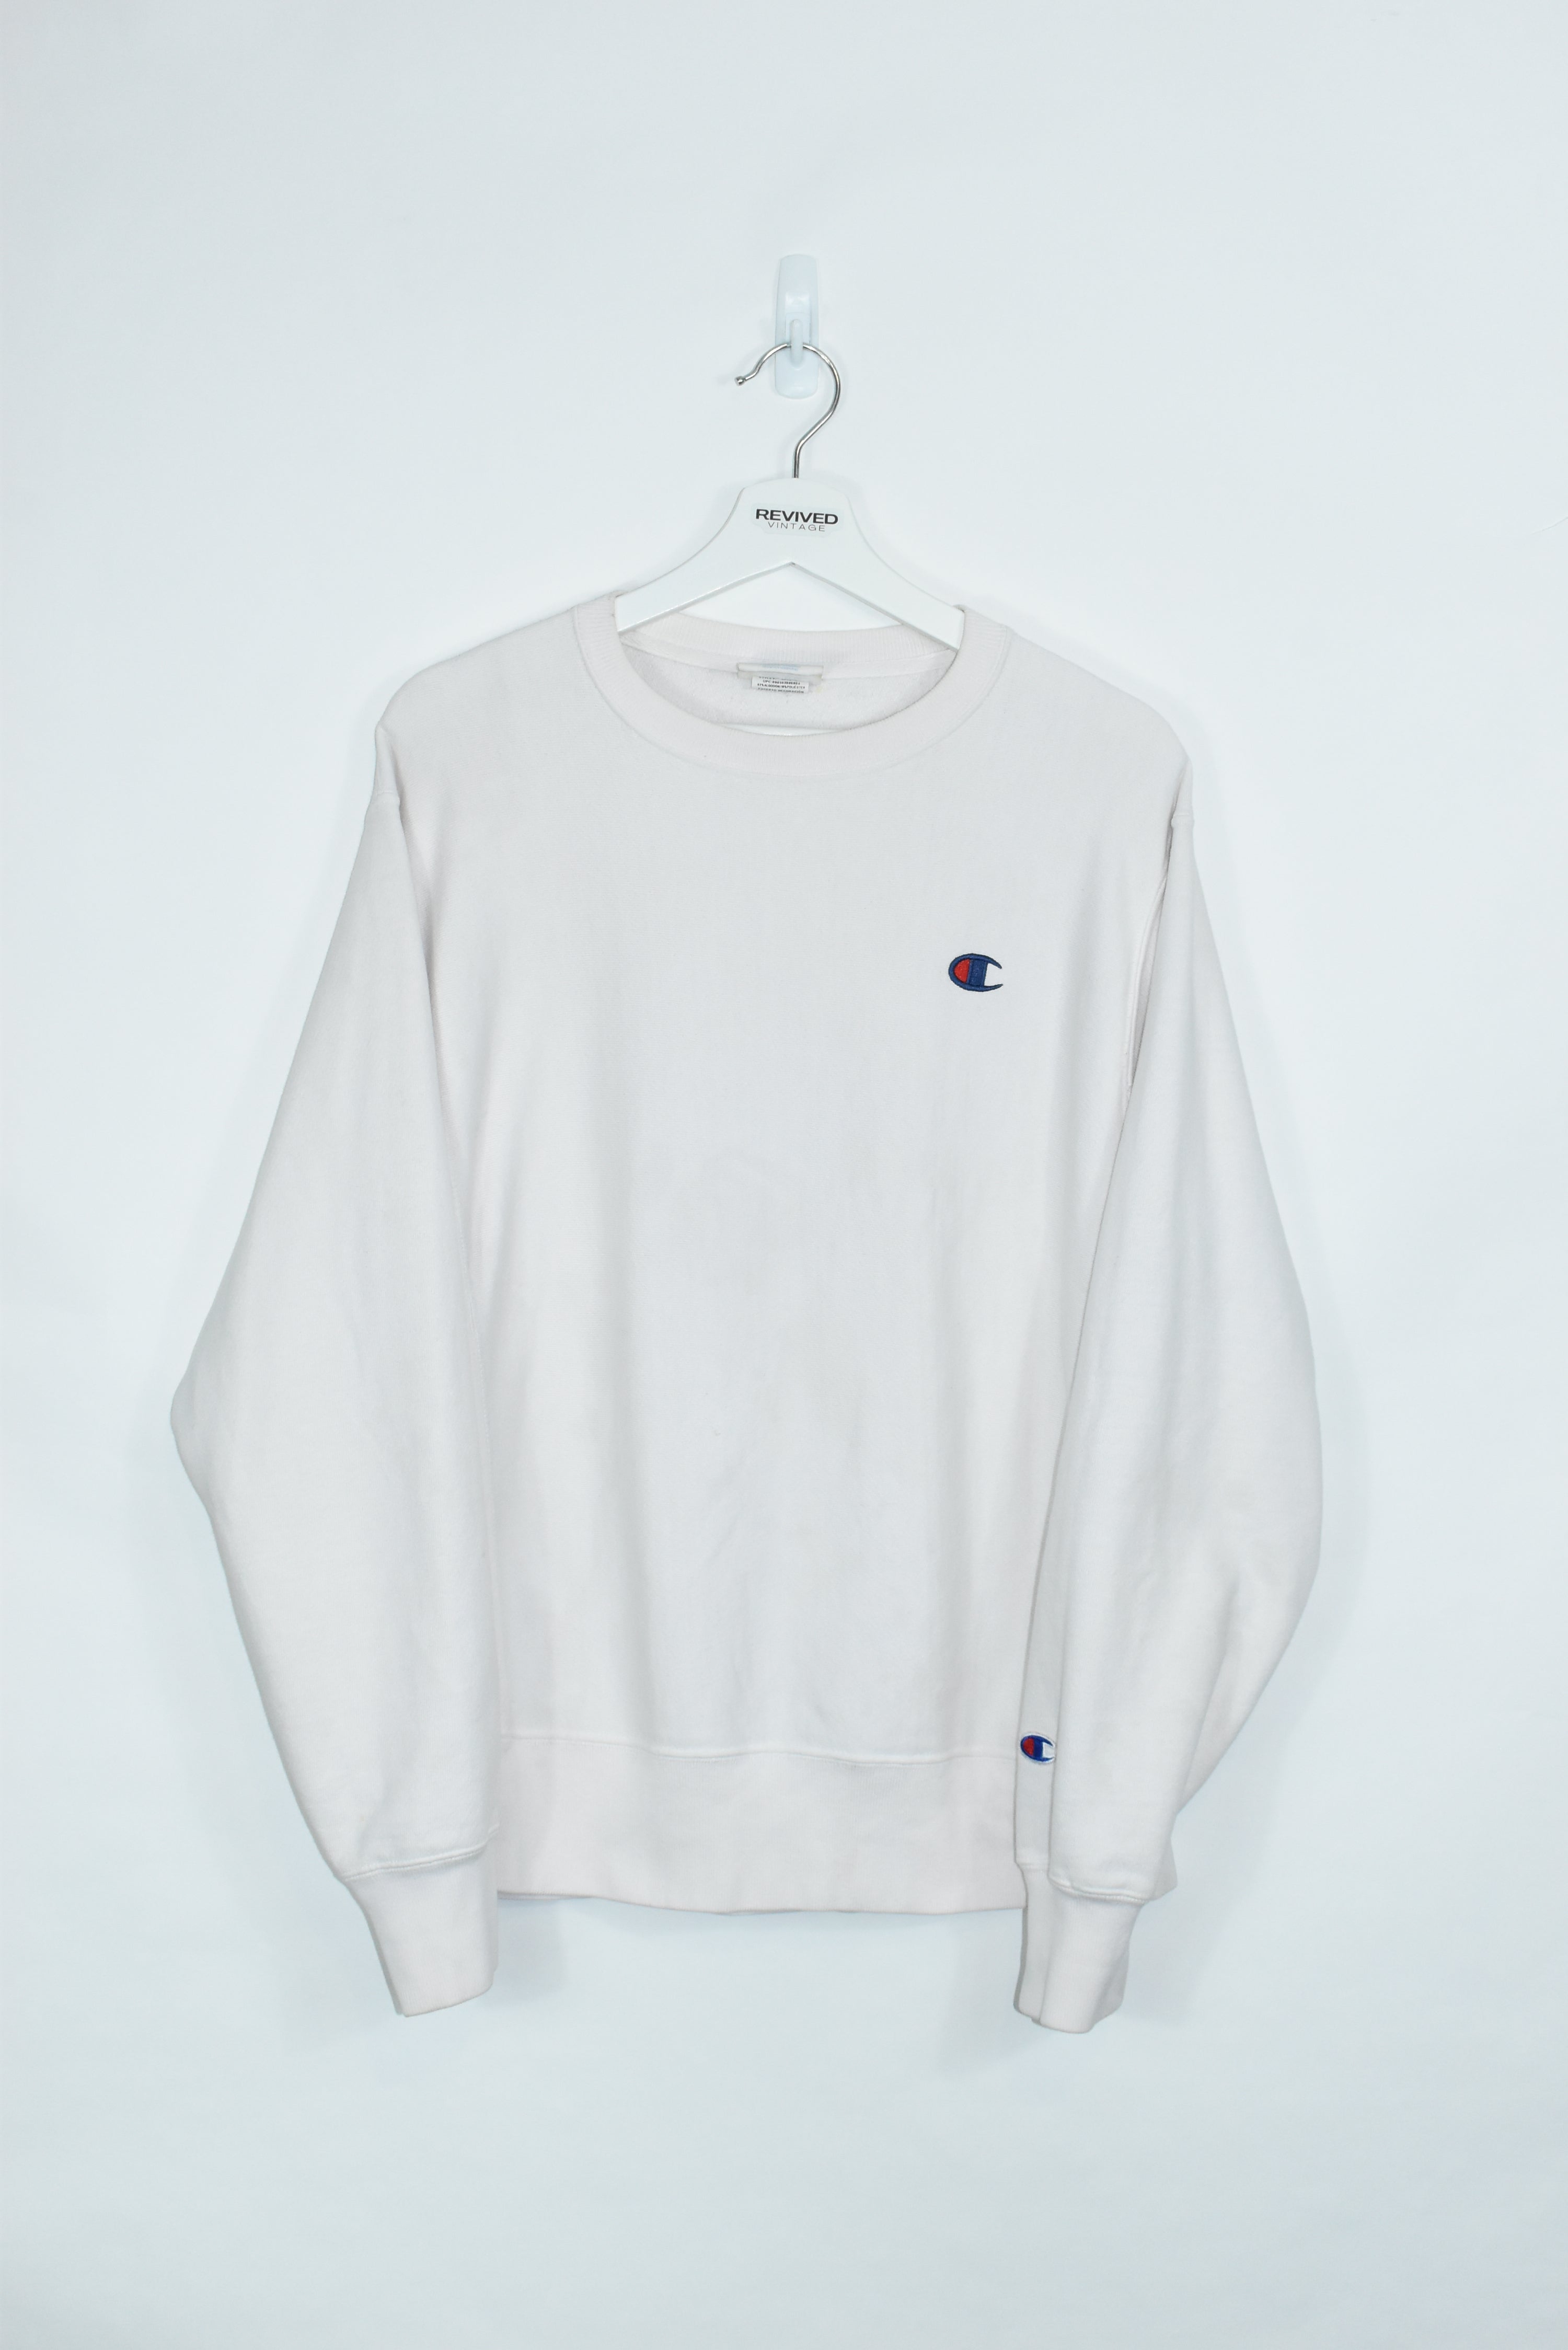 Vintage Champion Small Logo Embroidery White Sweatshirt Medium